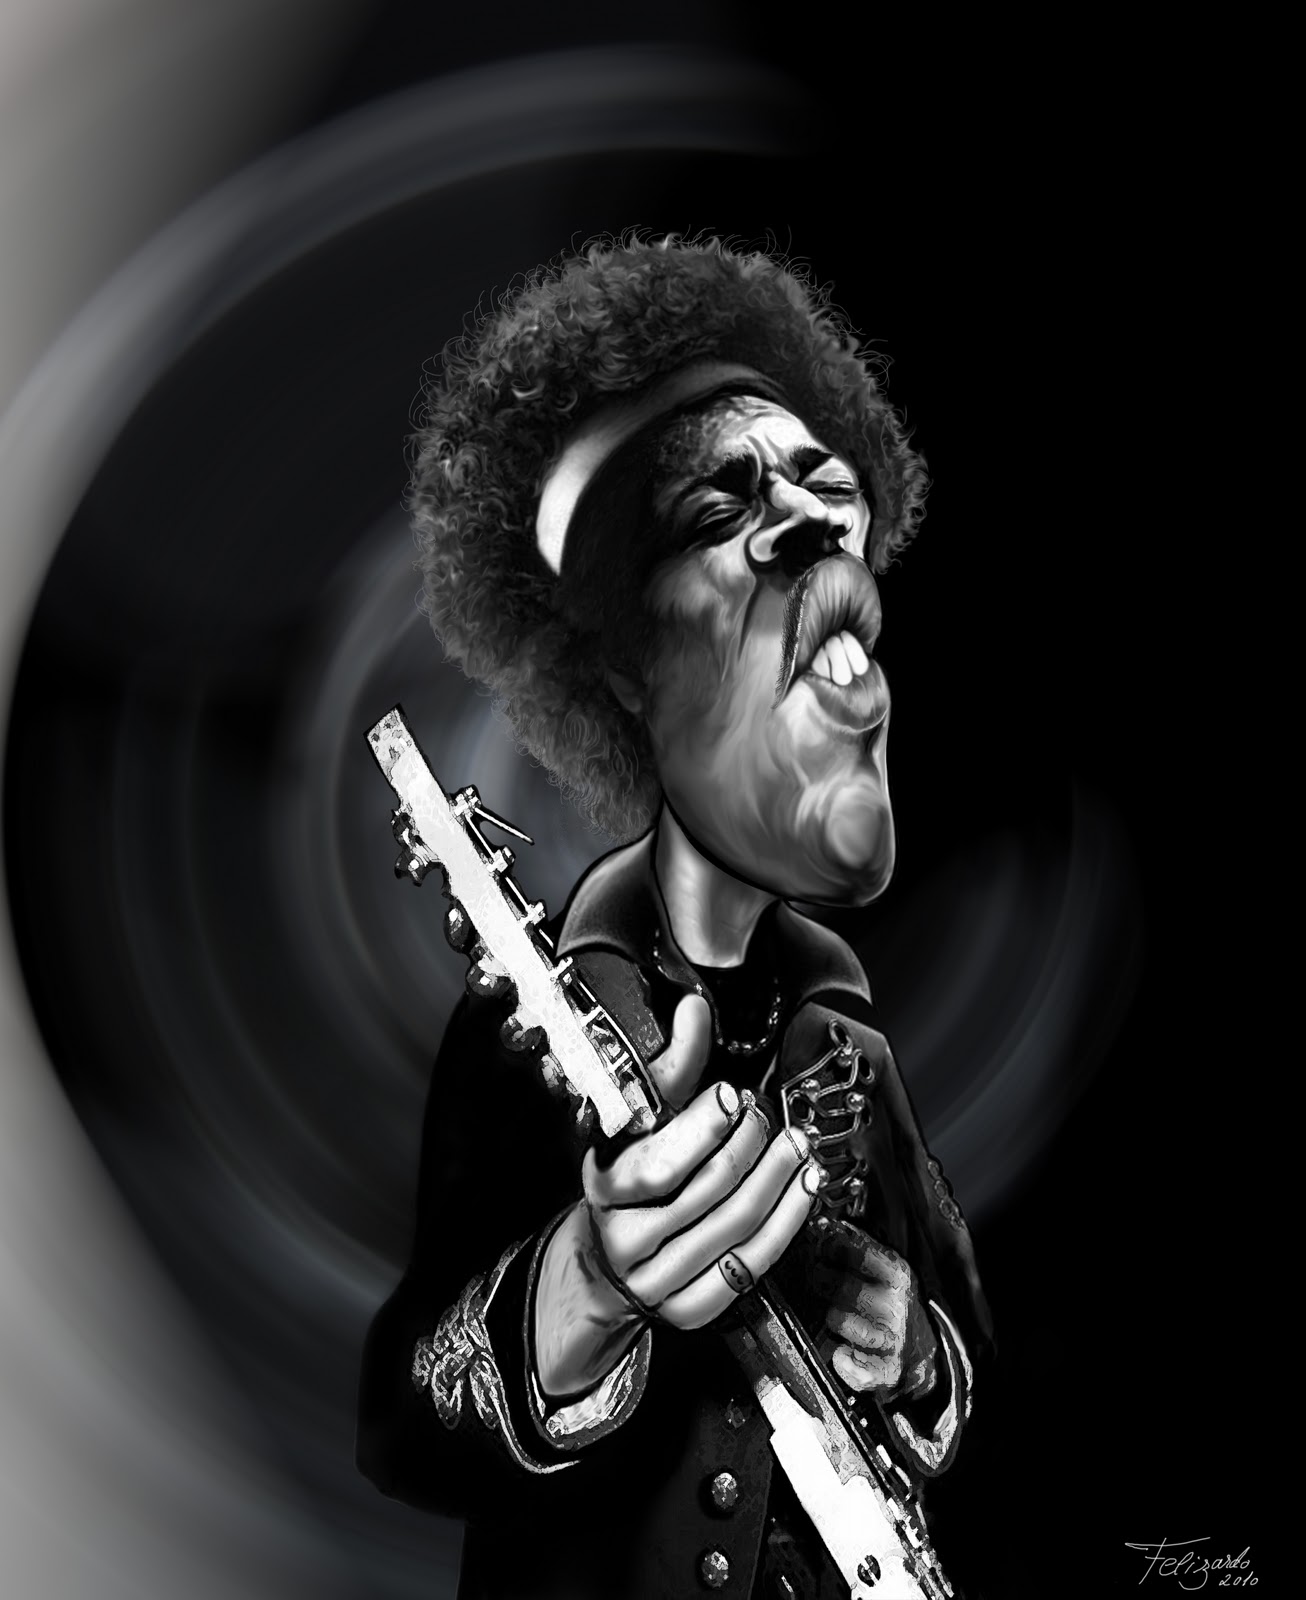 Caricatura de "Jimi" Hendrix.